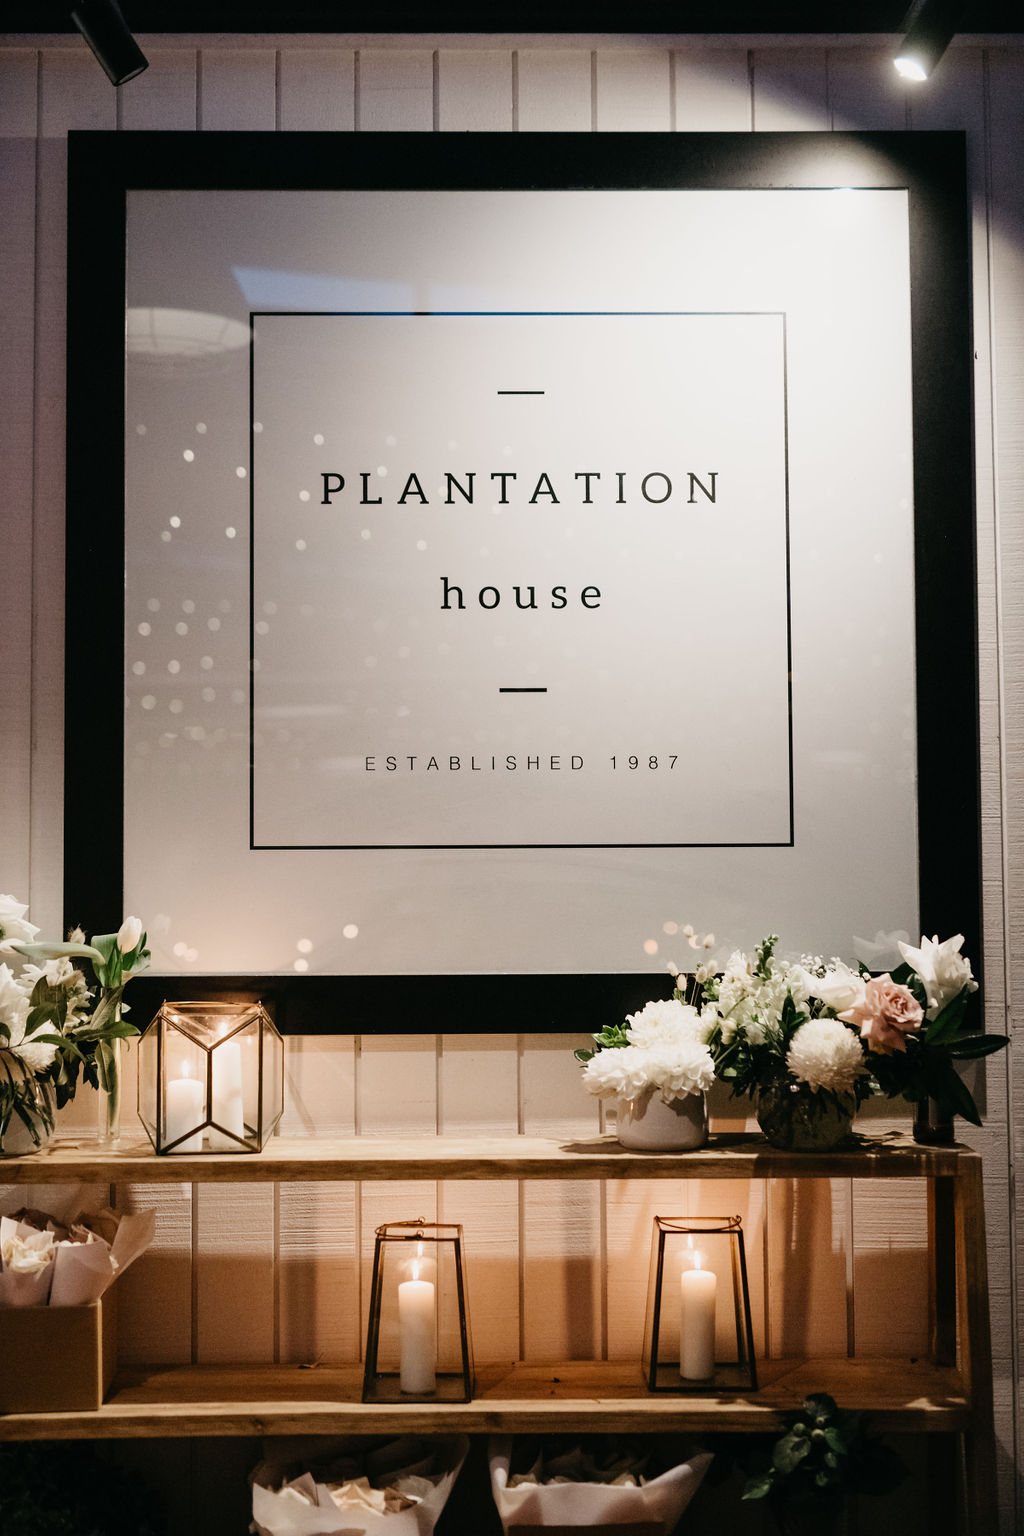 Rachel + Curt's Tweed Coast Wedding at Fins Plantation House | The Events Lounge Wedding Planning